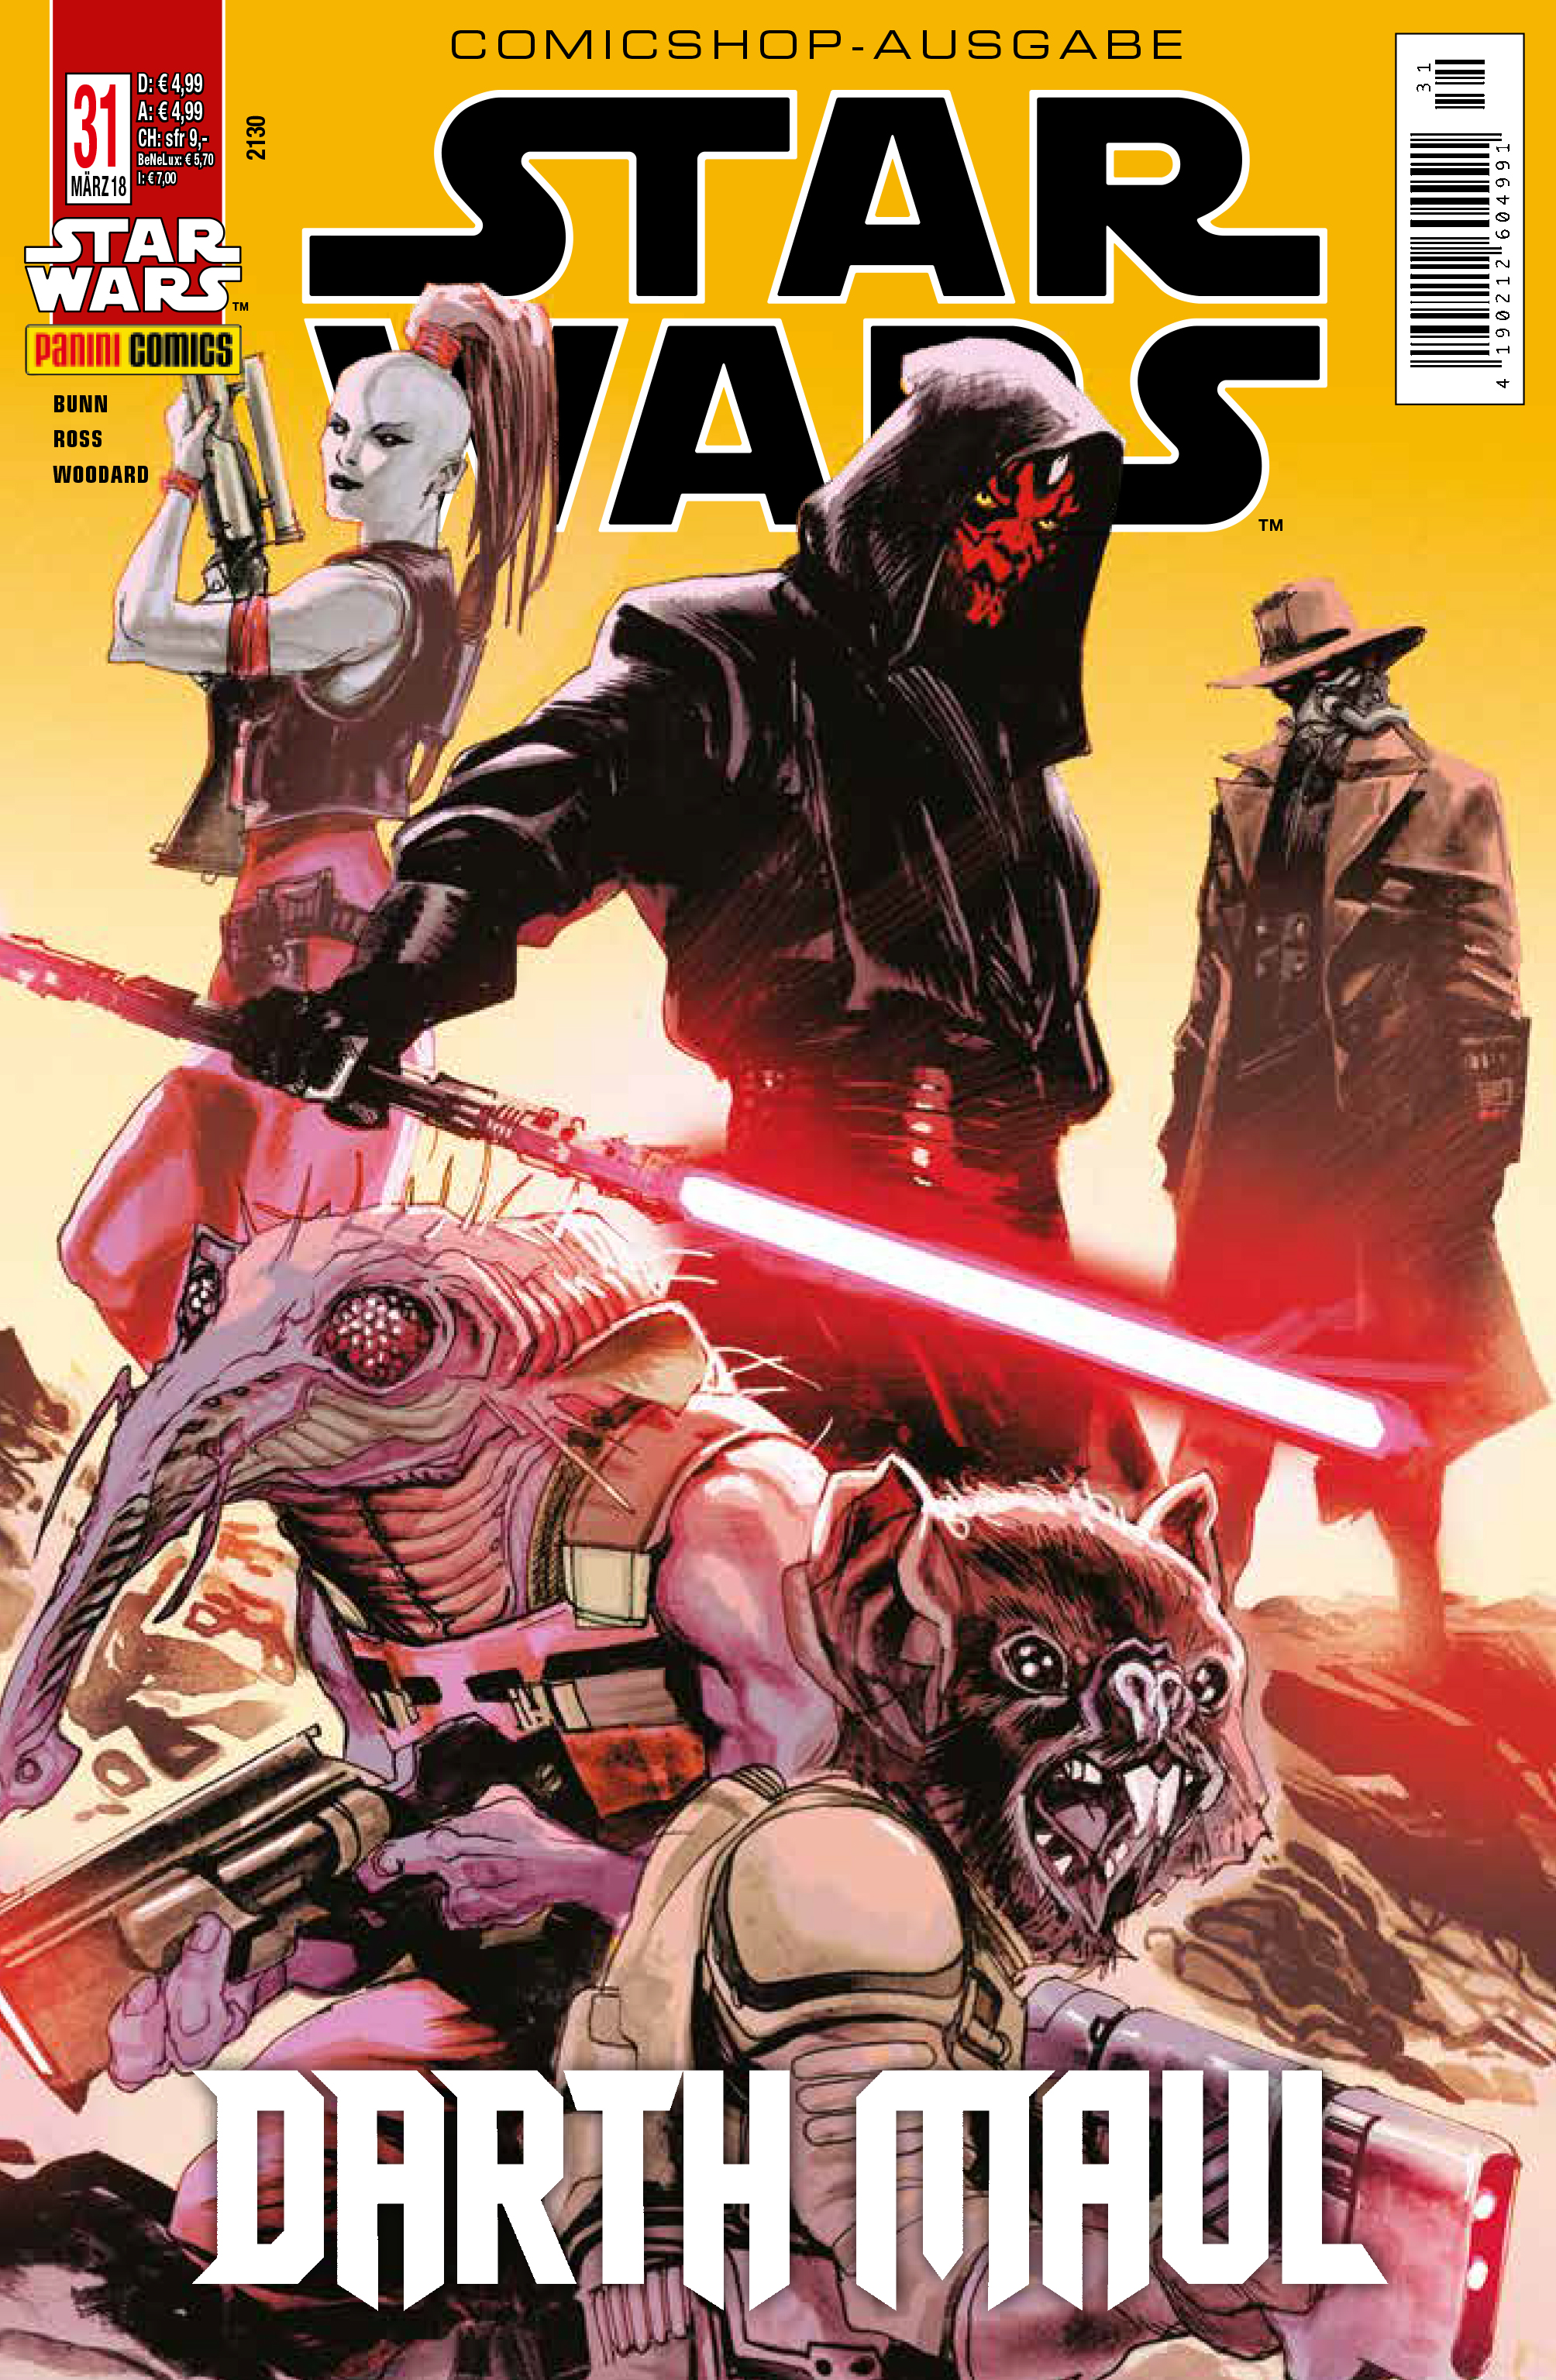 Star Wars #31 (Comicshop-Ausgabe) (21.02.2018)